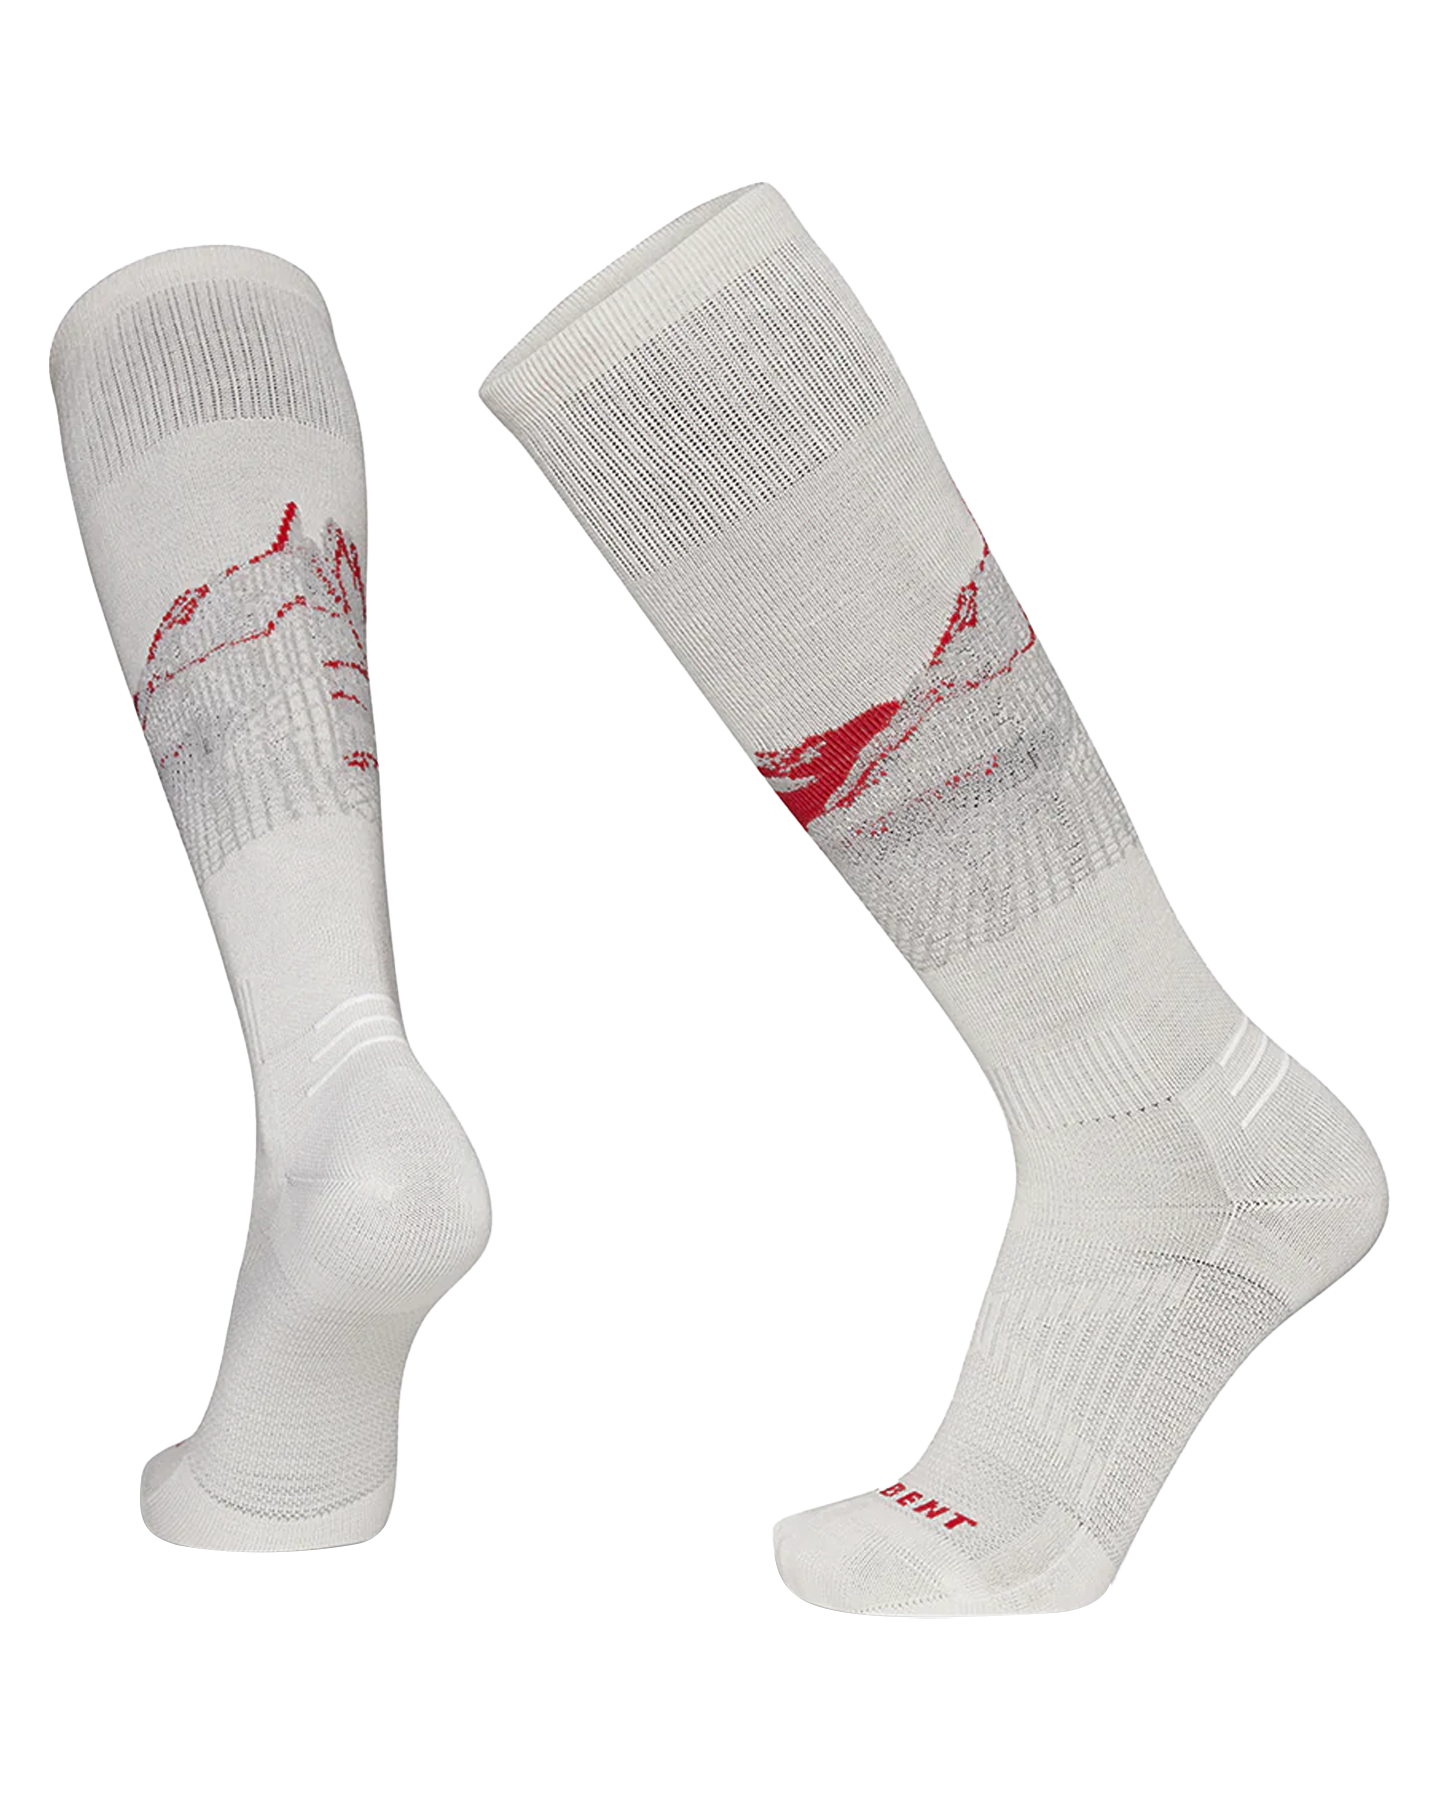 Le Bent Elyse Saugstad Pro Series Zero Cushion Socks - Lily White Socks - Trojan Wake Ski Snow